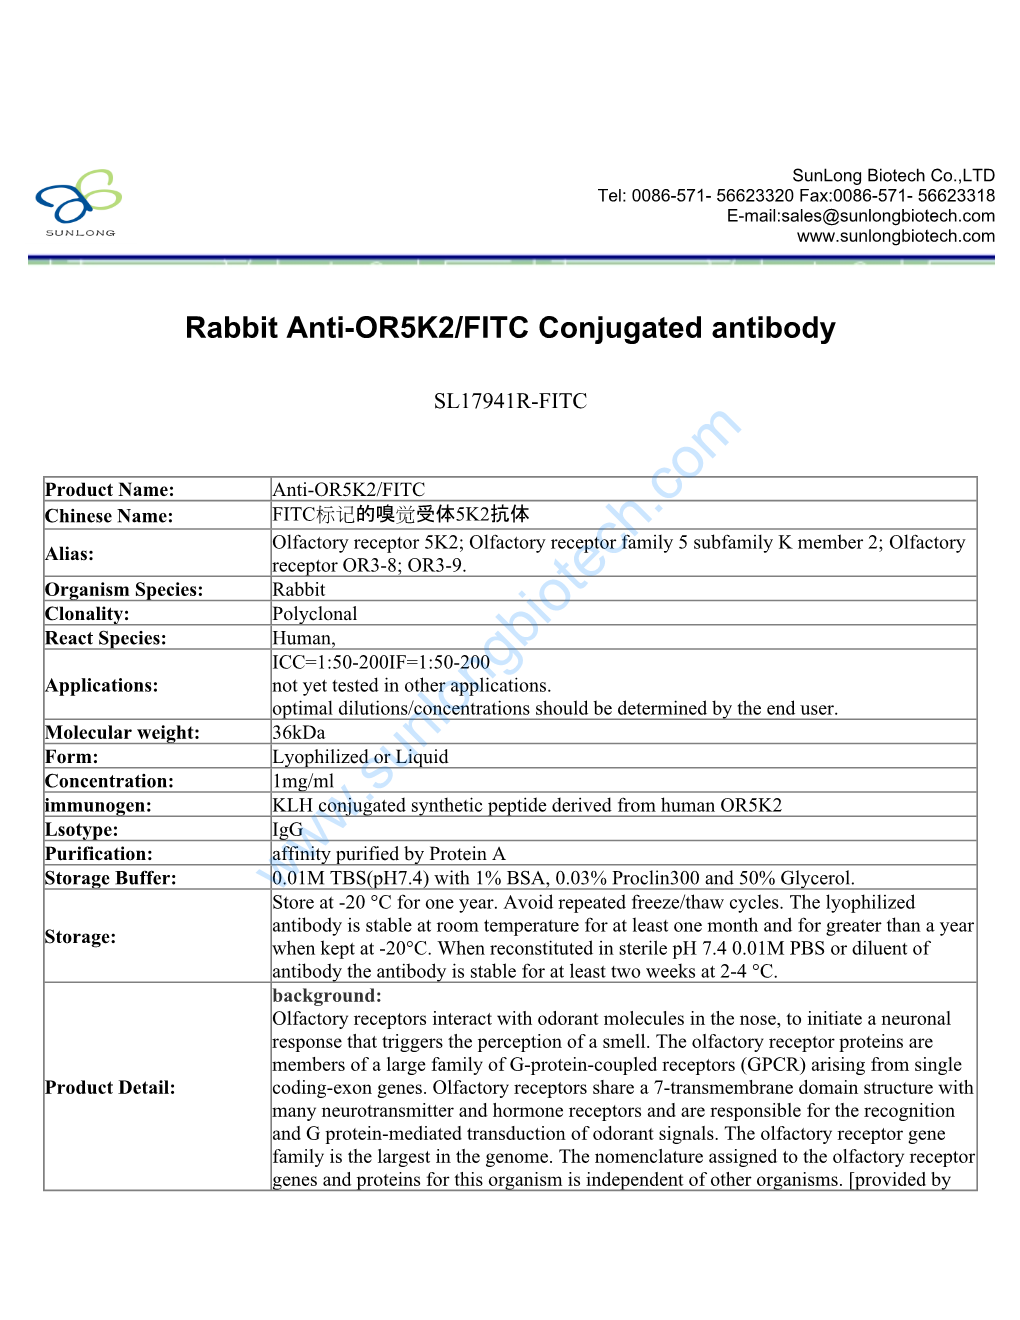 Rabbit Anti-OR5K2/FITC Conjugated Antibody